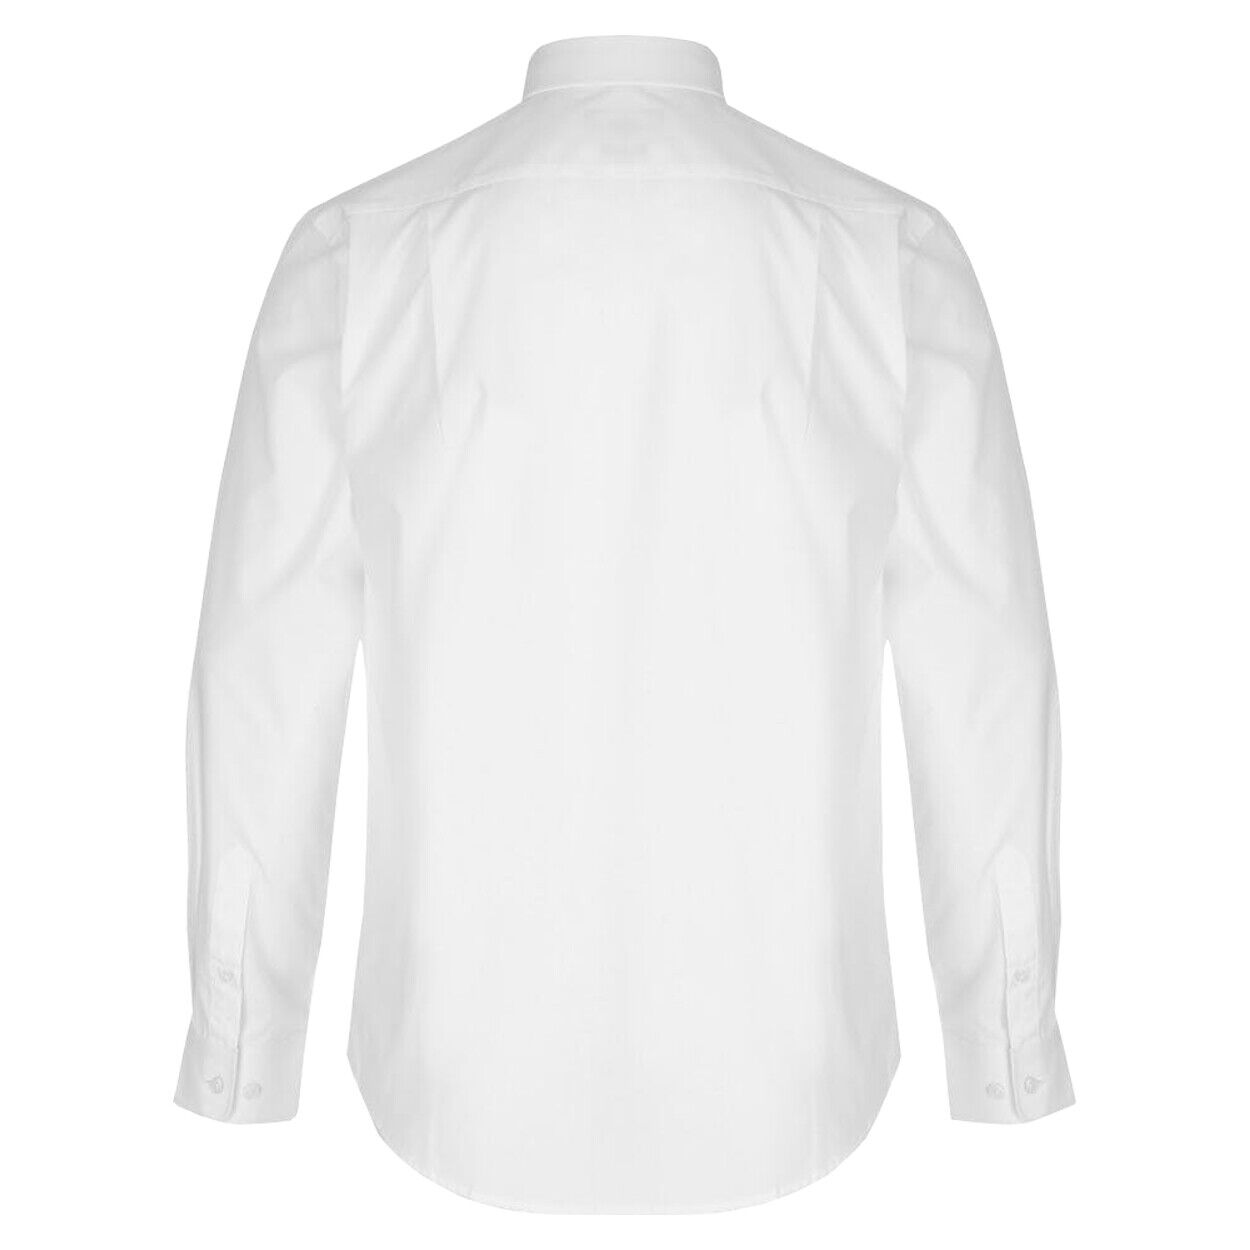 KHAISA Oversized Pure Cotton Oxford Shirt